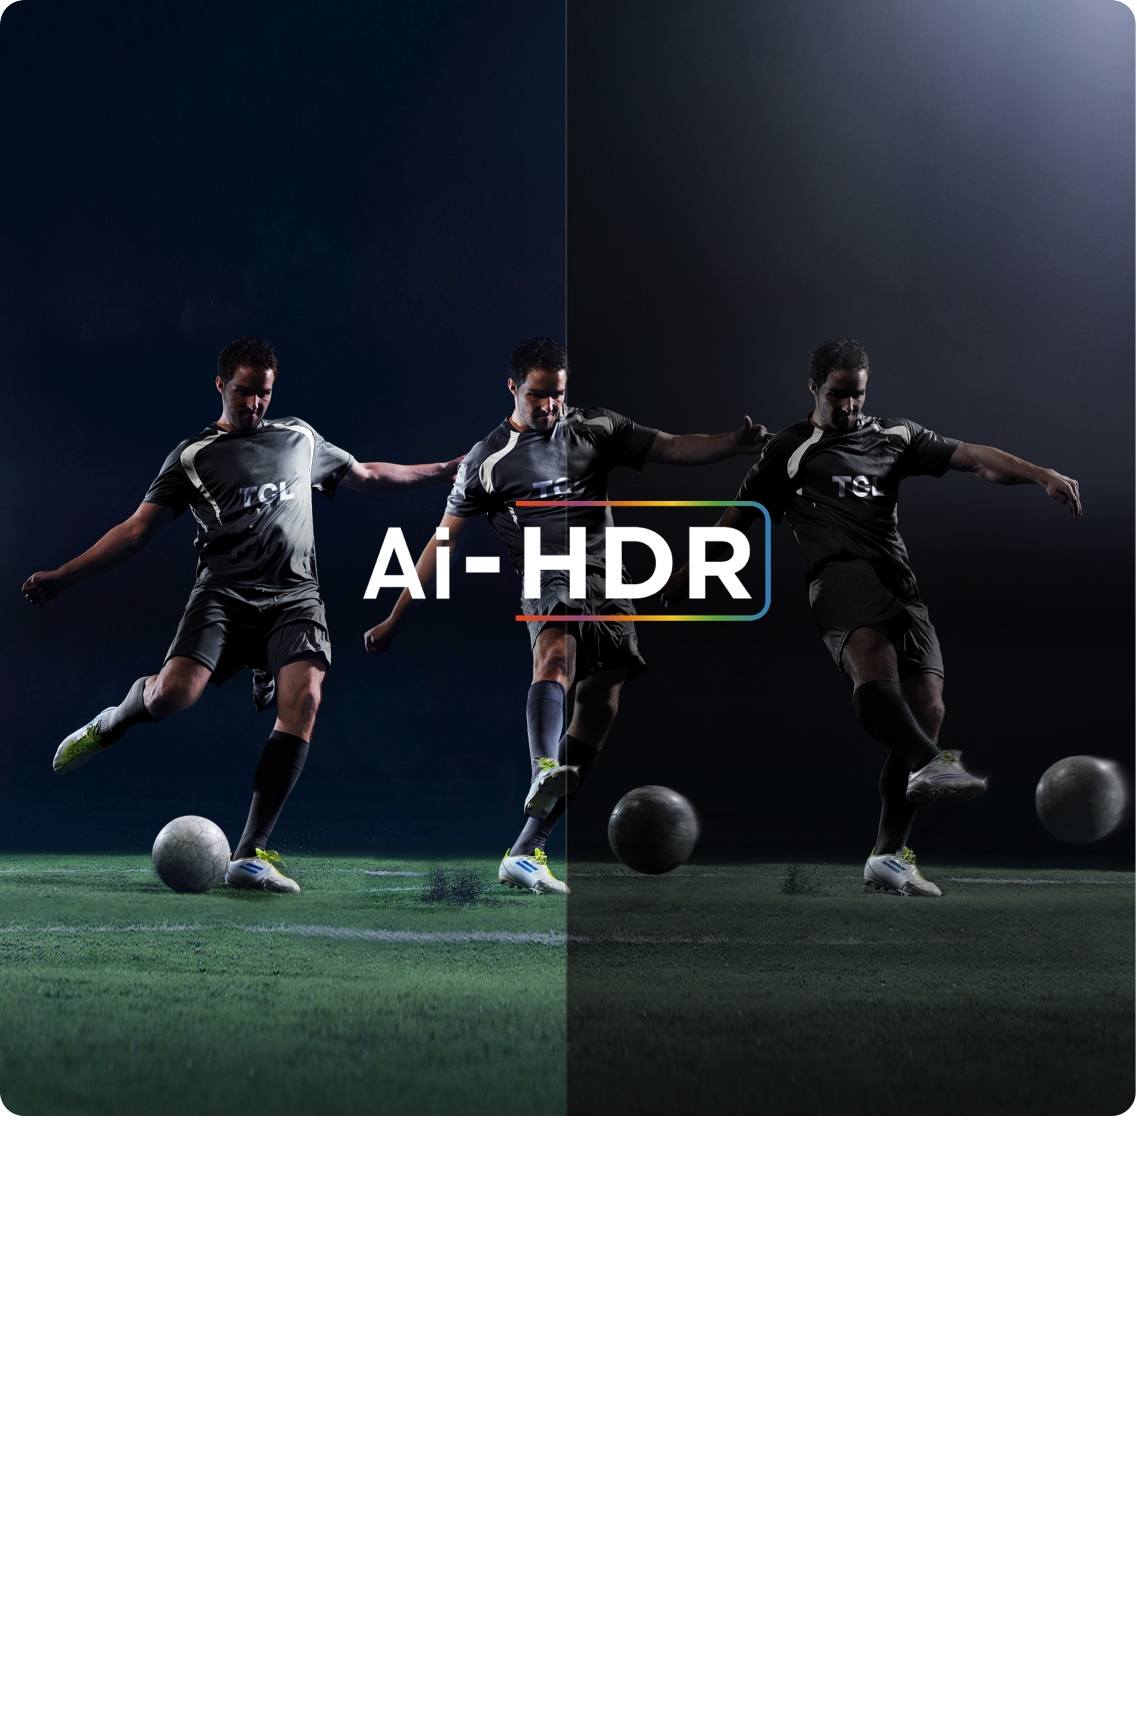 TCL TV suporta formatos Multi HDR